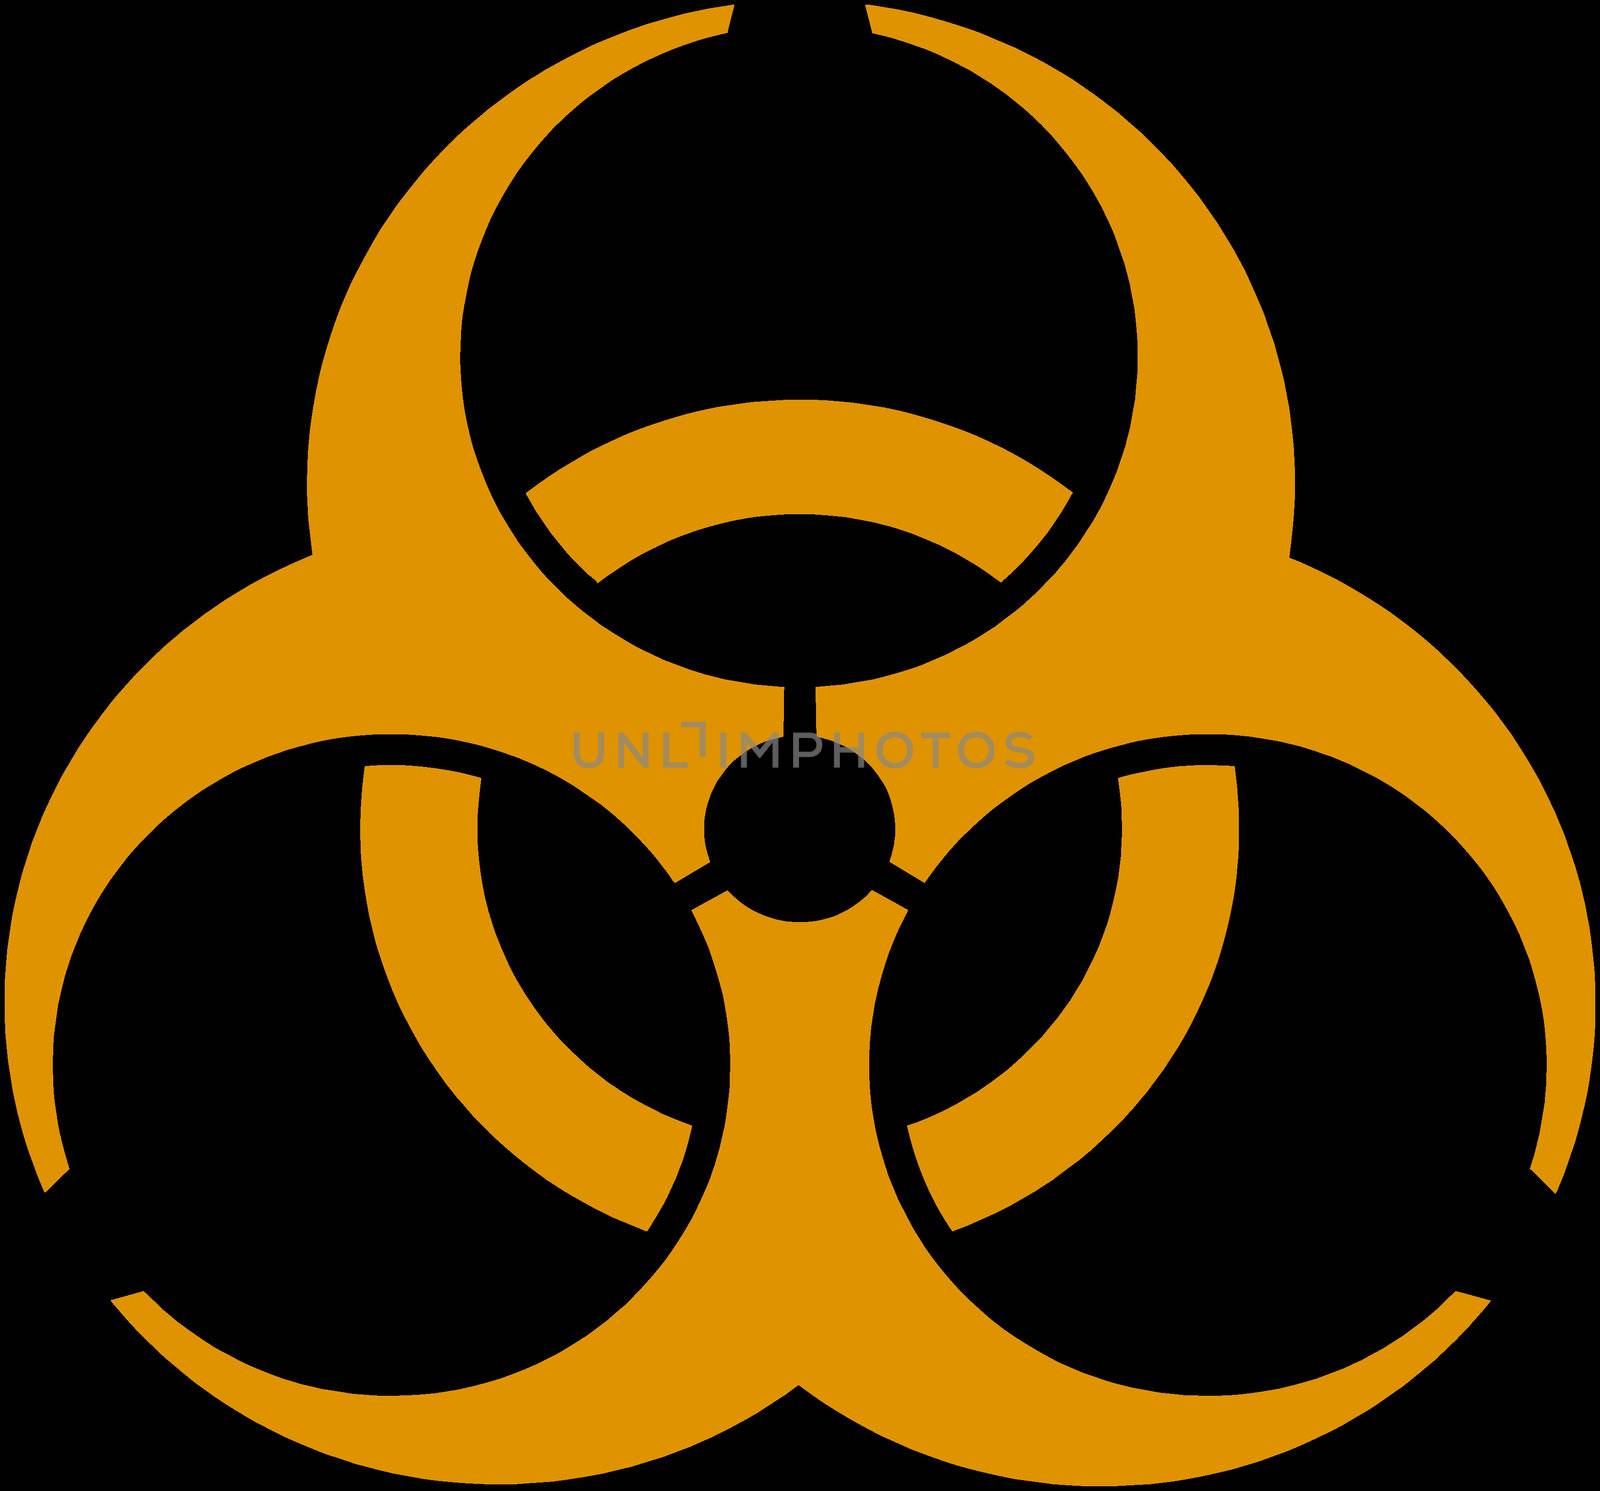 Biohazard - an orange emblem on a black background